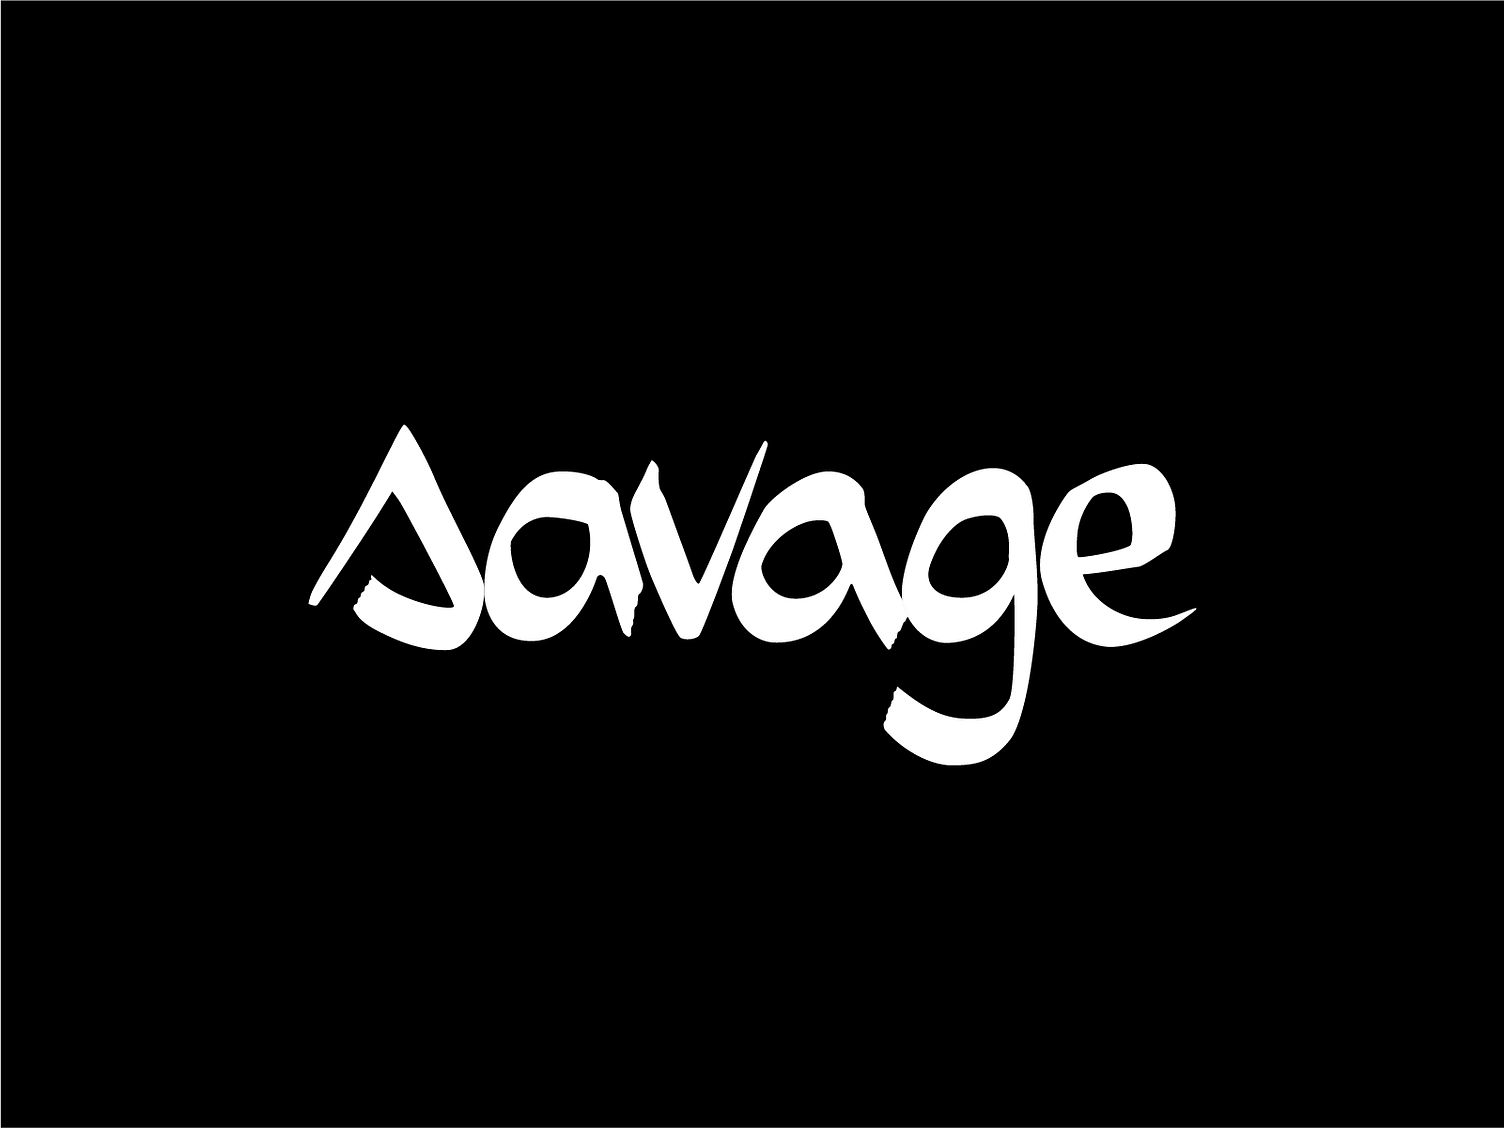 savage by Aleksa Radaković on Dribbble